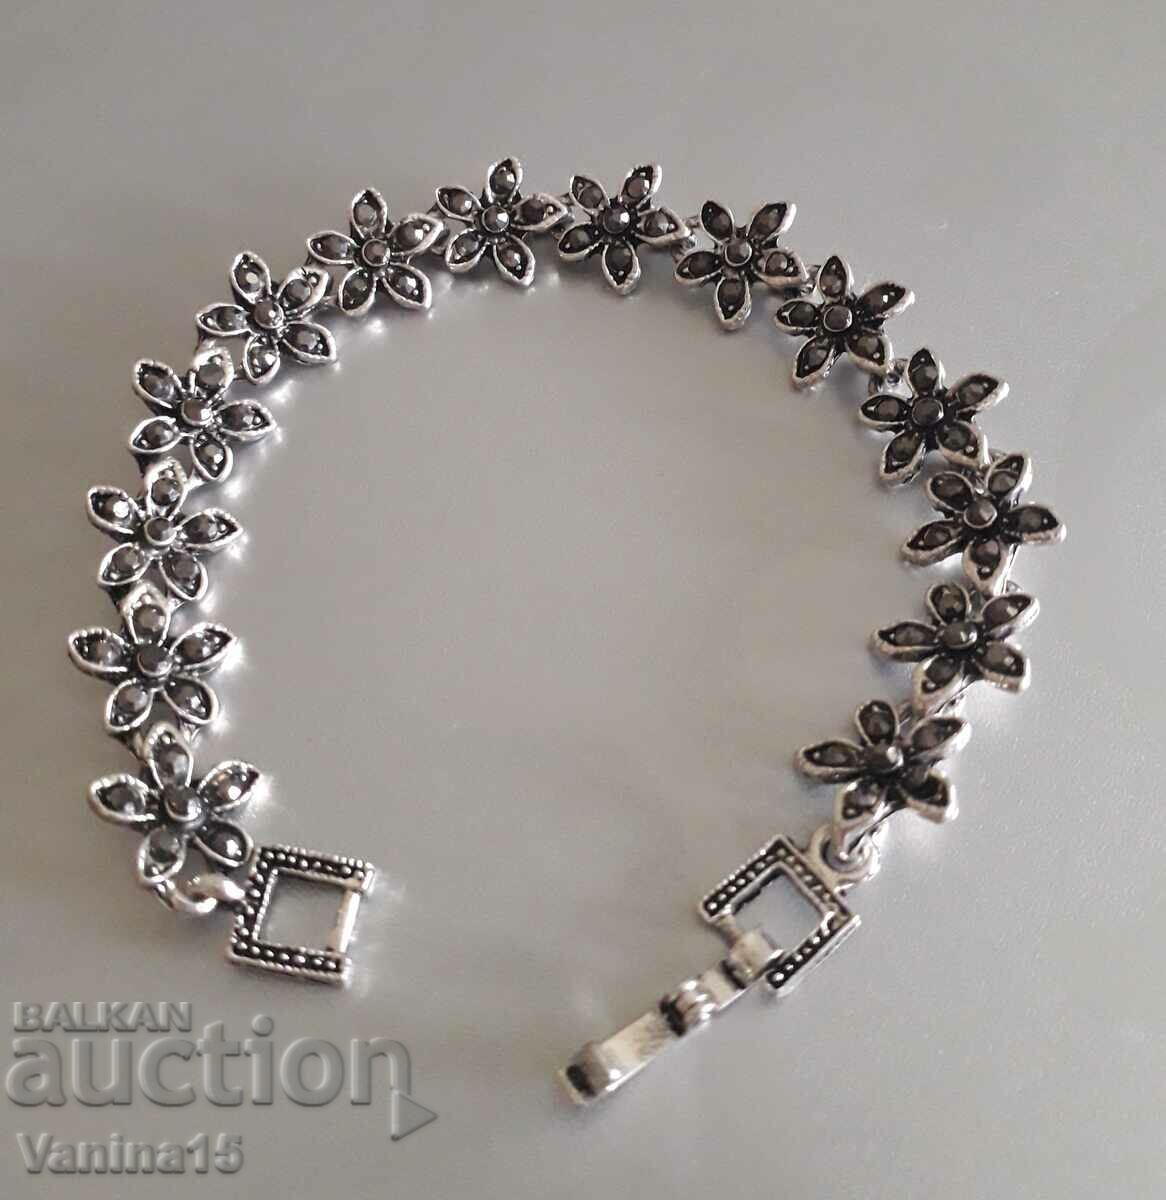 Silver women's bracelet with marcasite